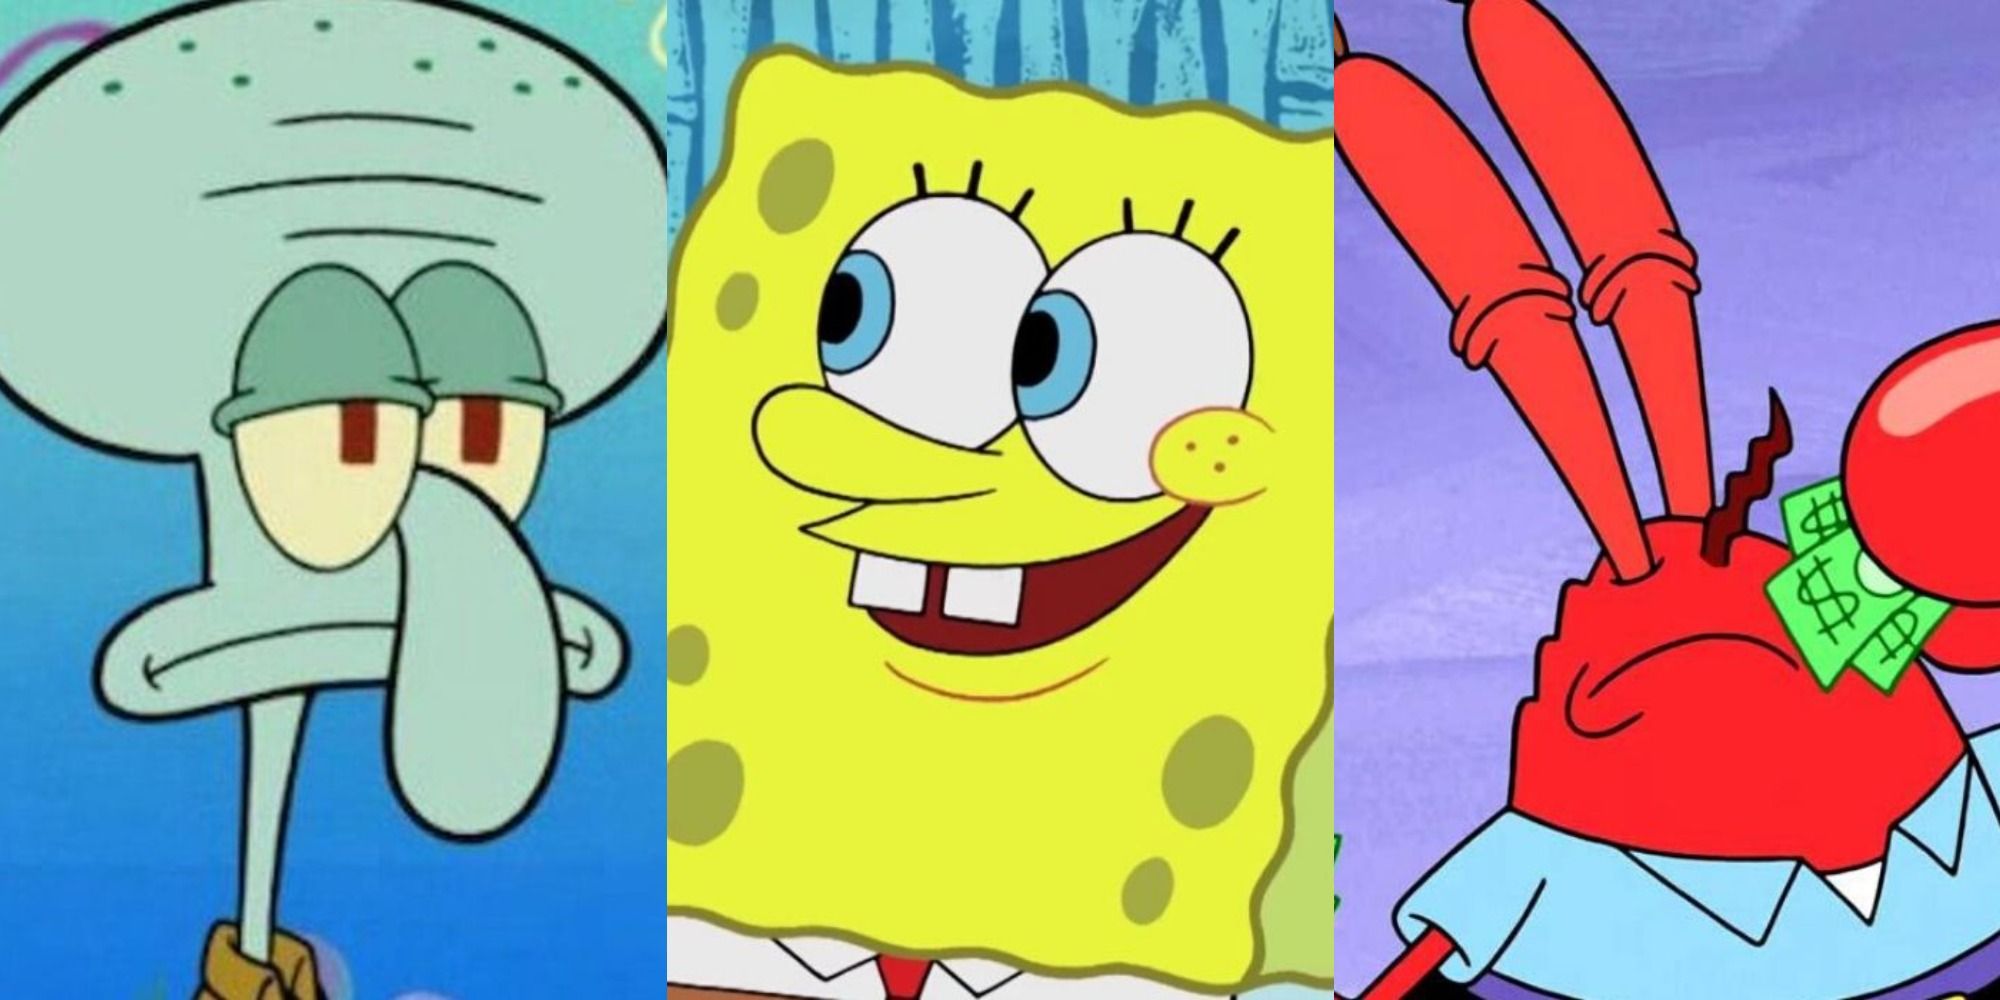 Split image of Squidward, SpongeBob, and Mr Krabs from SpongeBob Squarepants